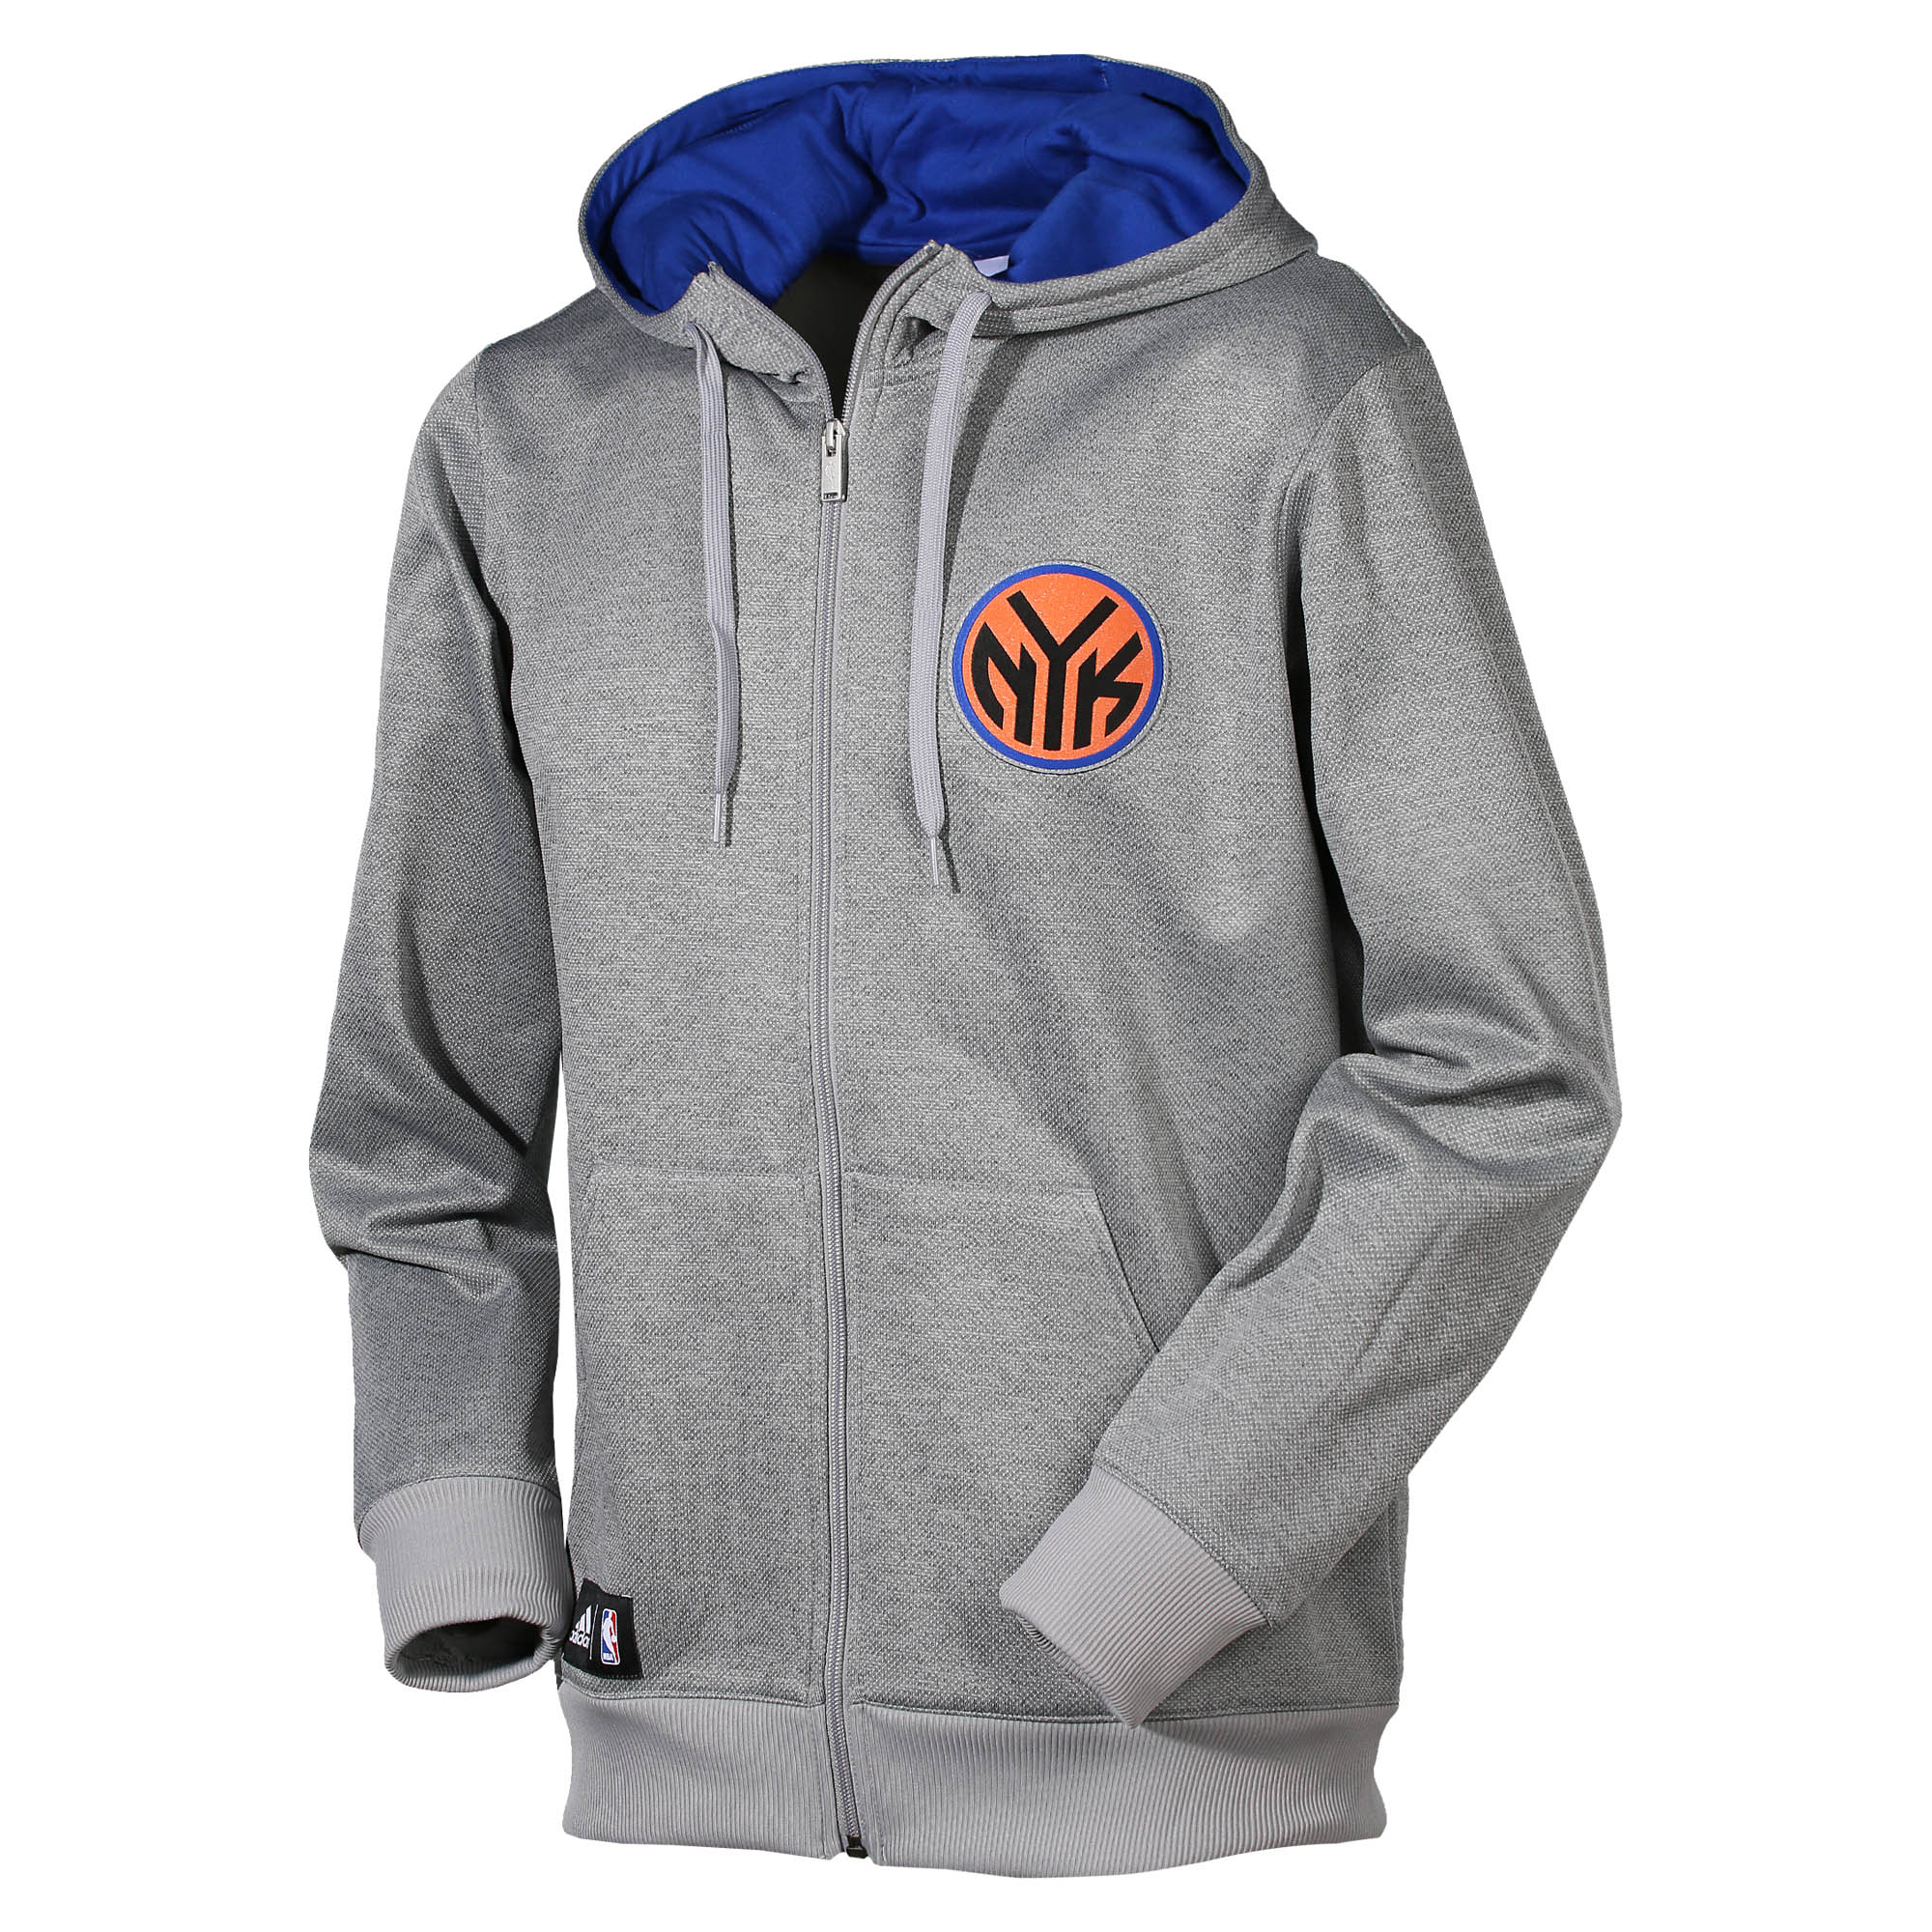 Adidas NBA New York Knicks Fan Wear (gris/azul)